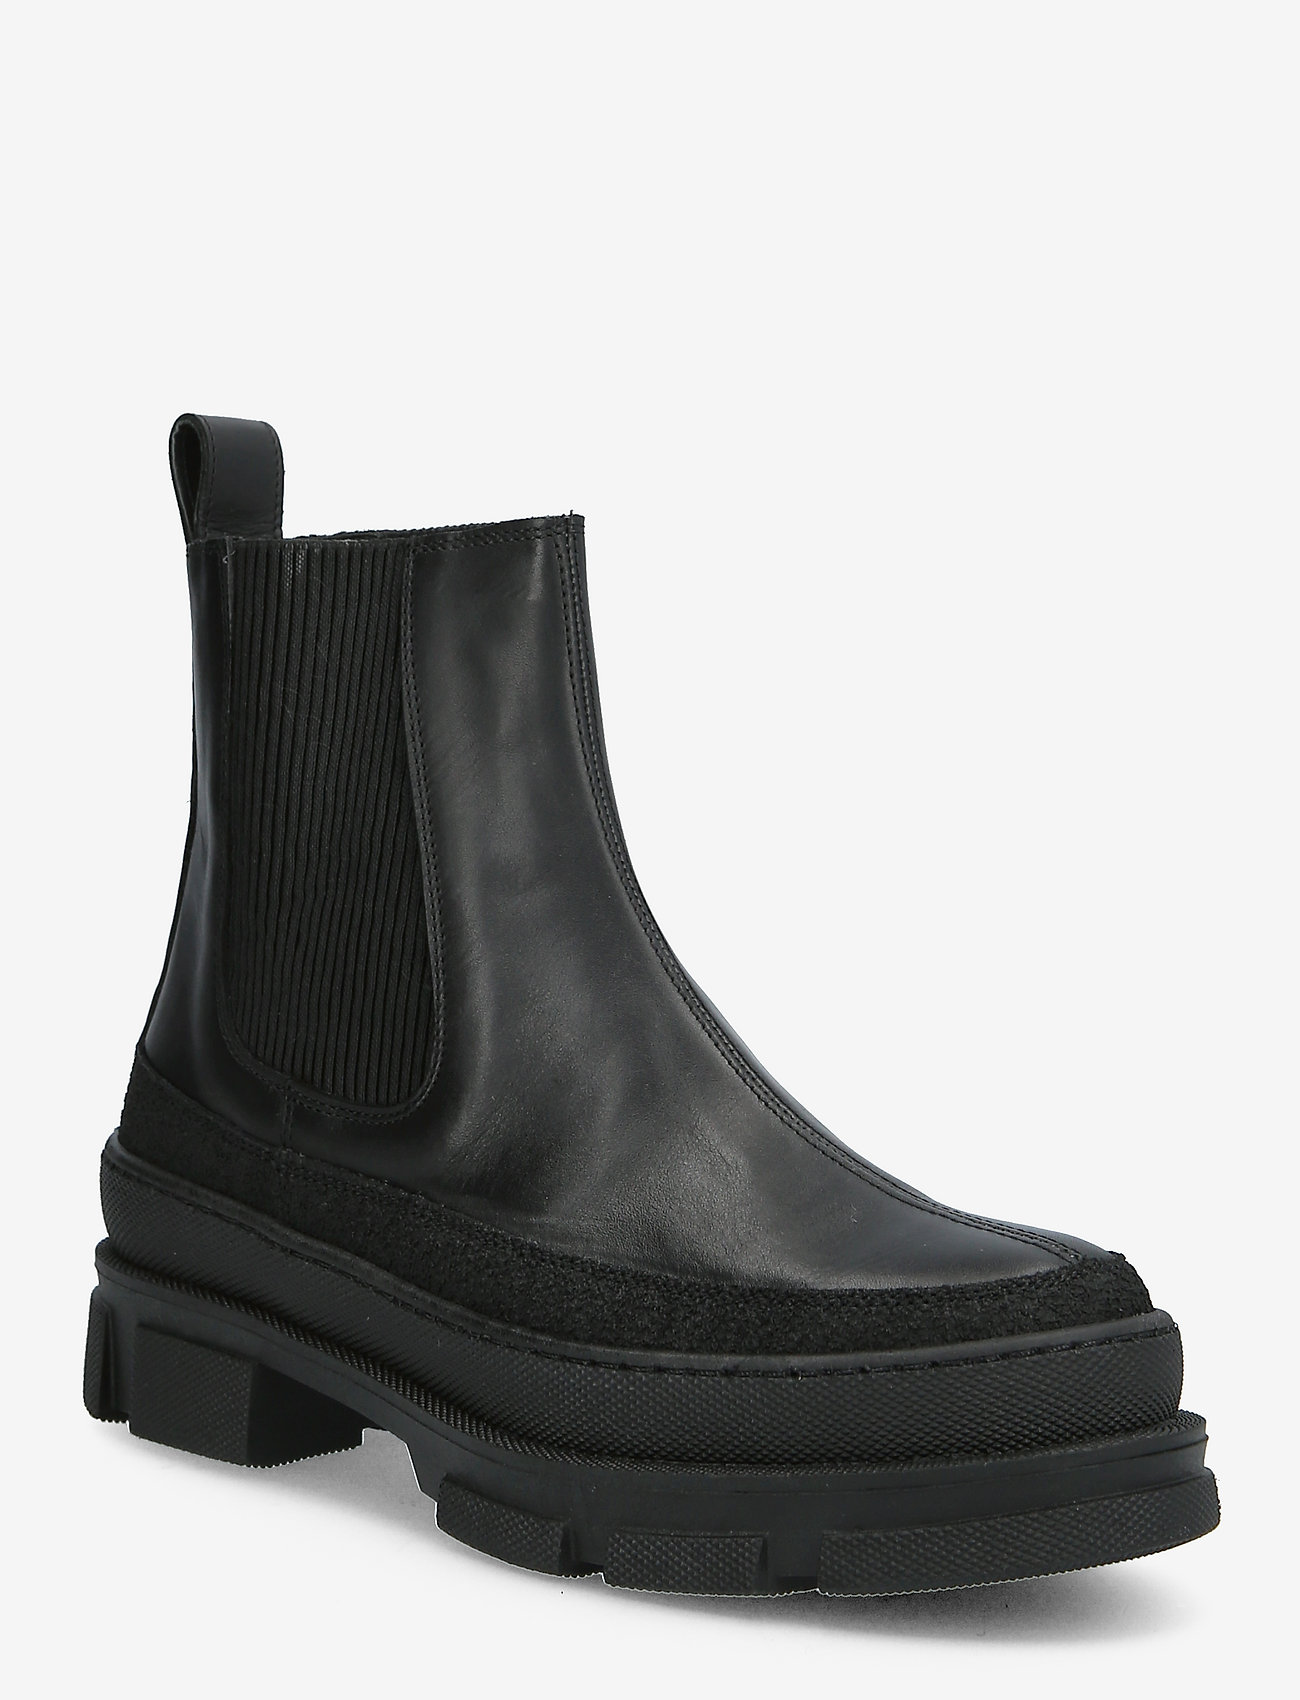 ANGULUS - Boots - flat - nordic style - 1321/1605/019 black/black/blac - 0